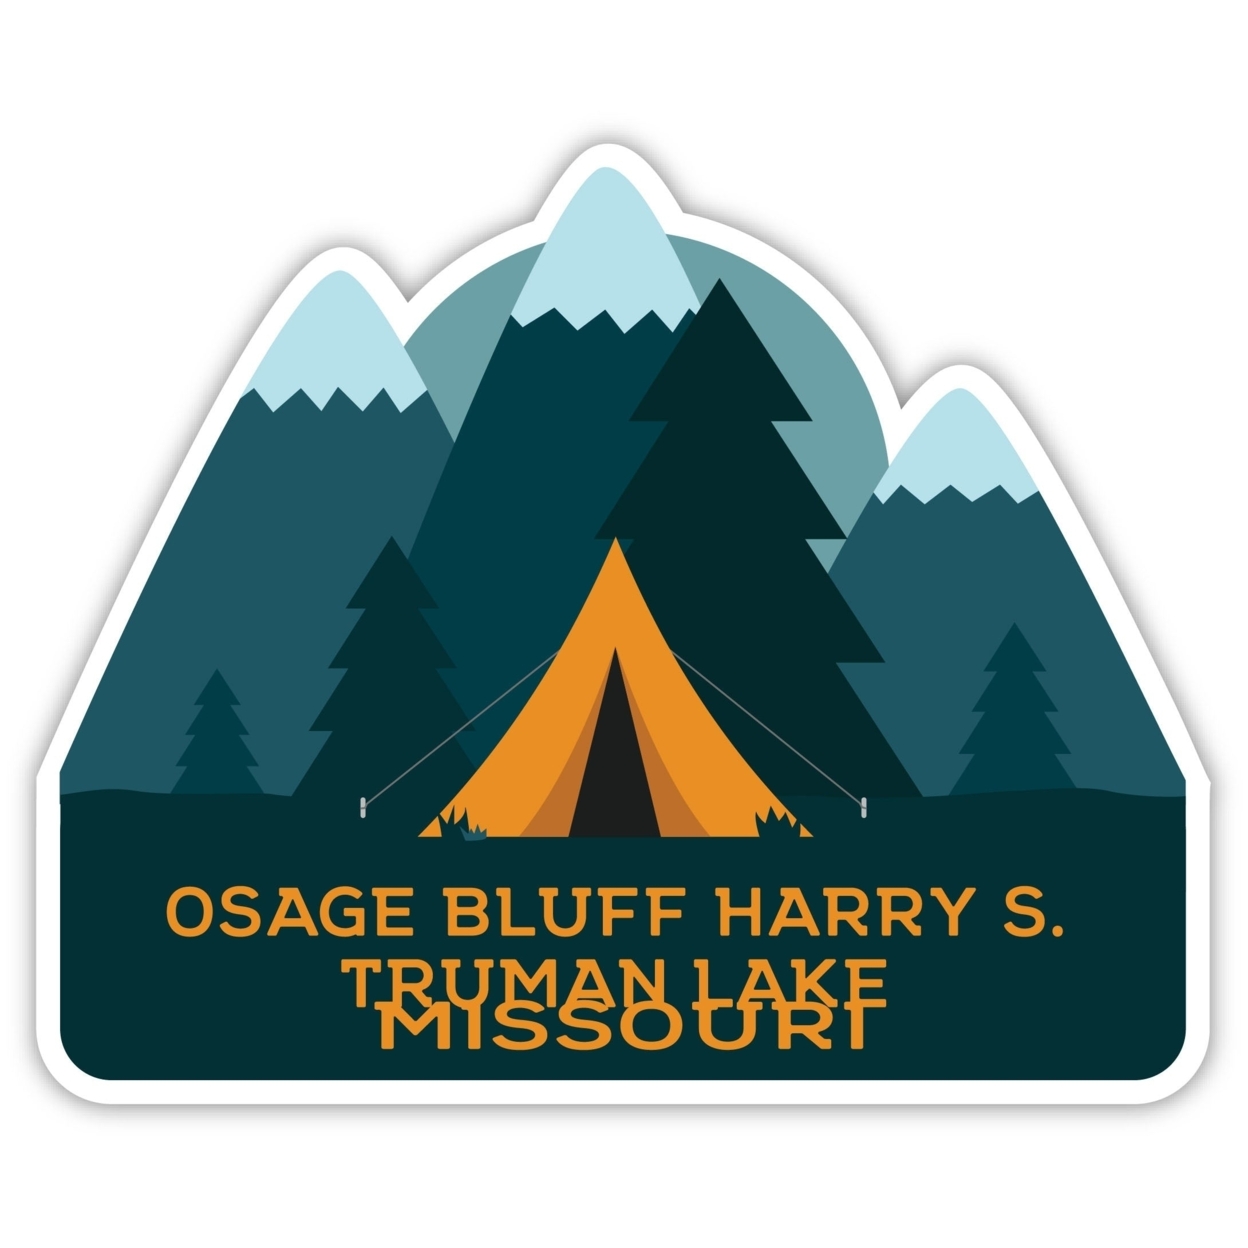 Osage Bluff Harry S. Truman Lake Missouri Souvenir Decorative Stickers (Choose Theme And Size) - Single Unit, 4-Inch, Tent